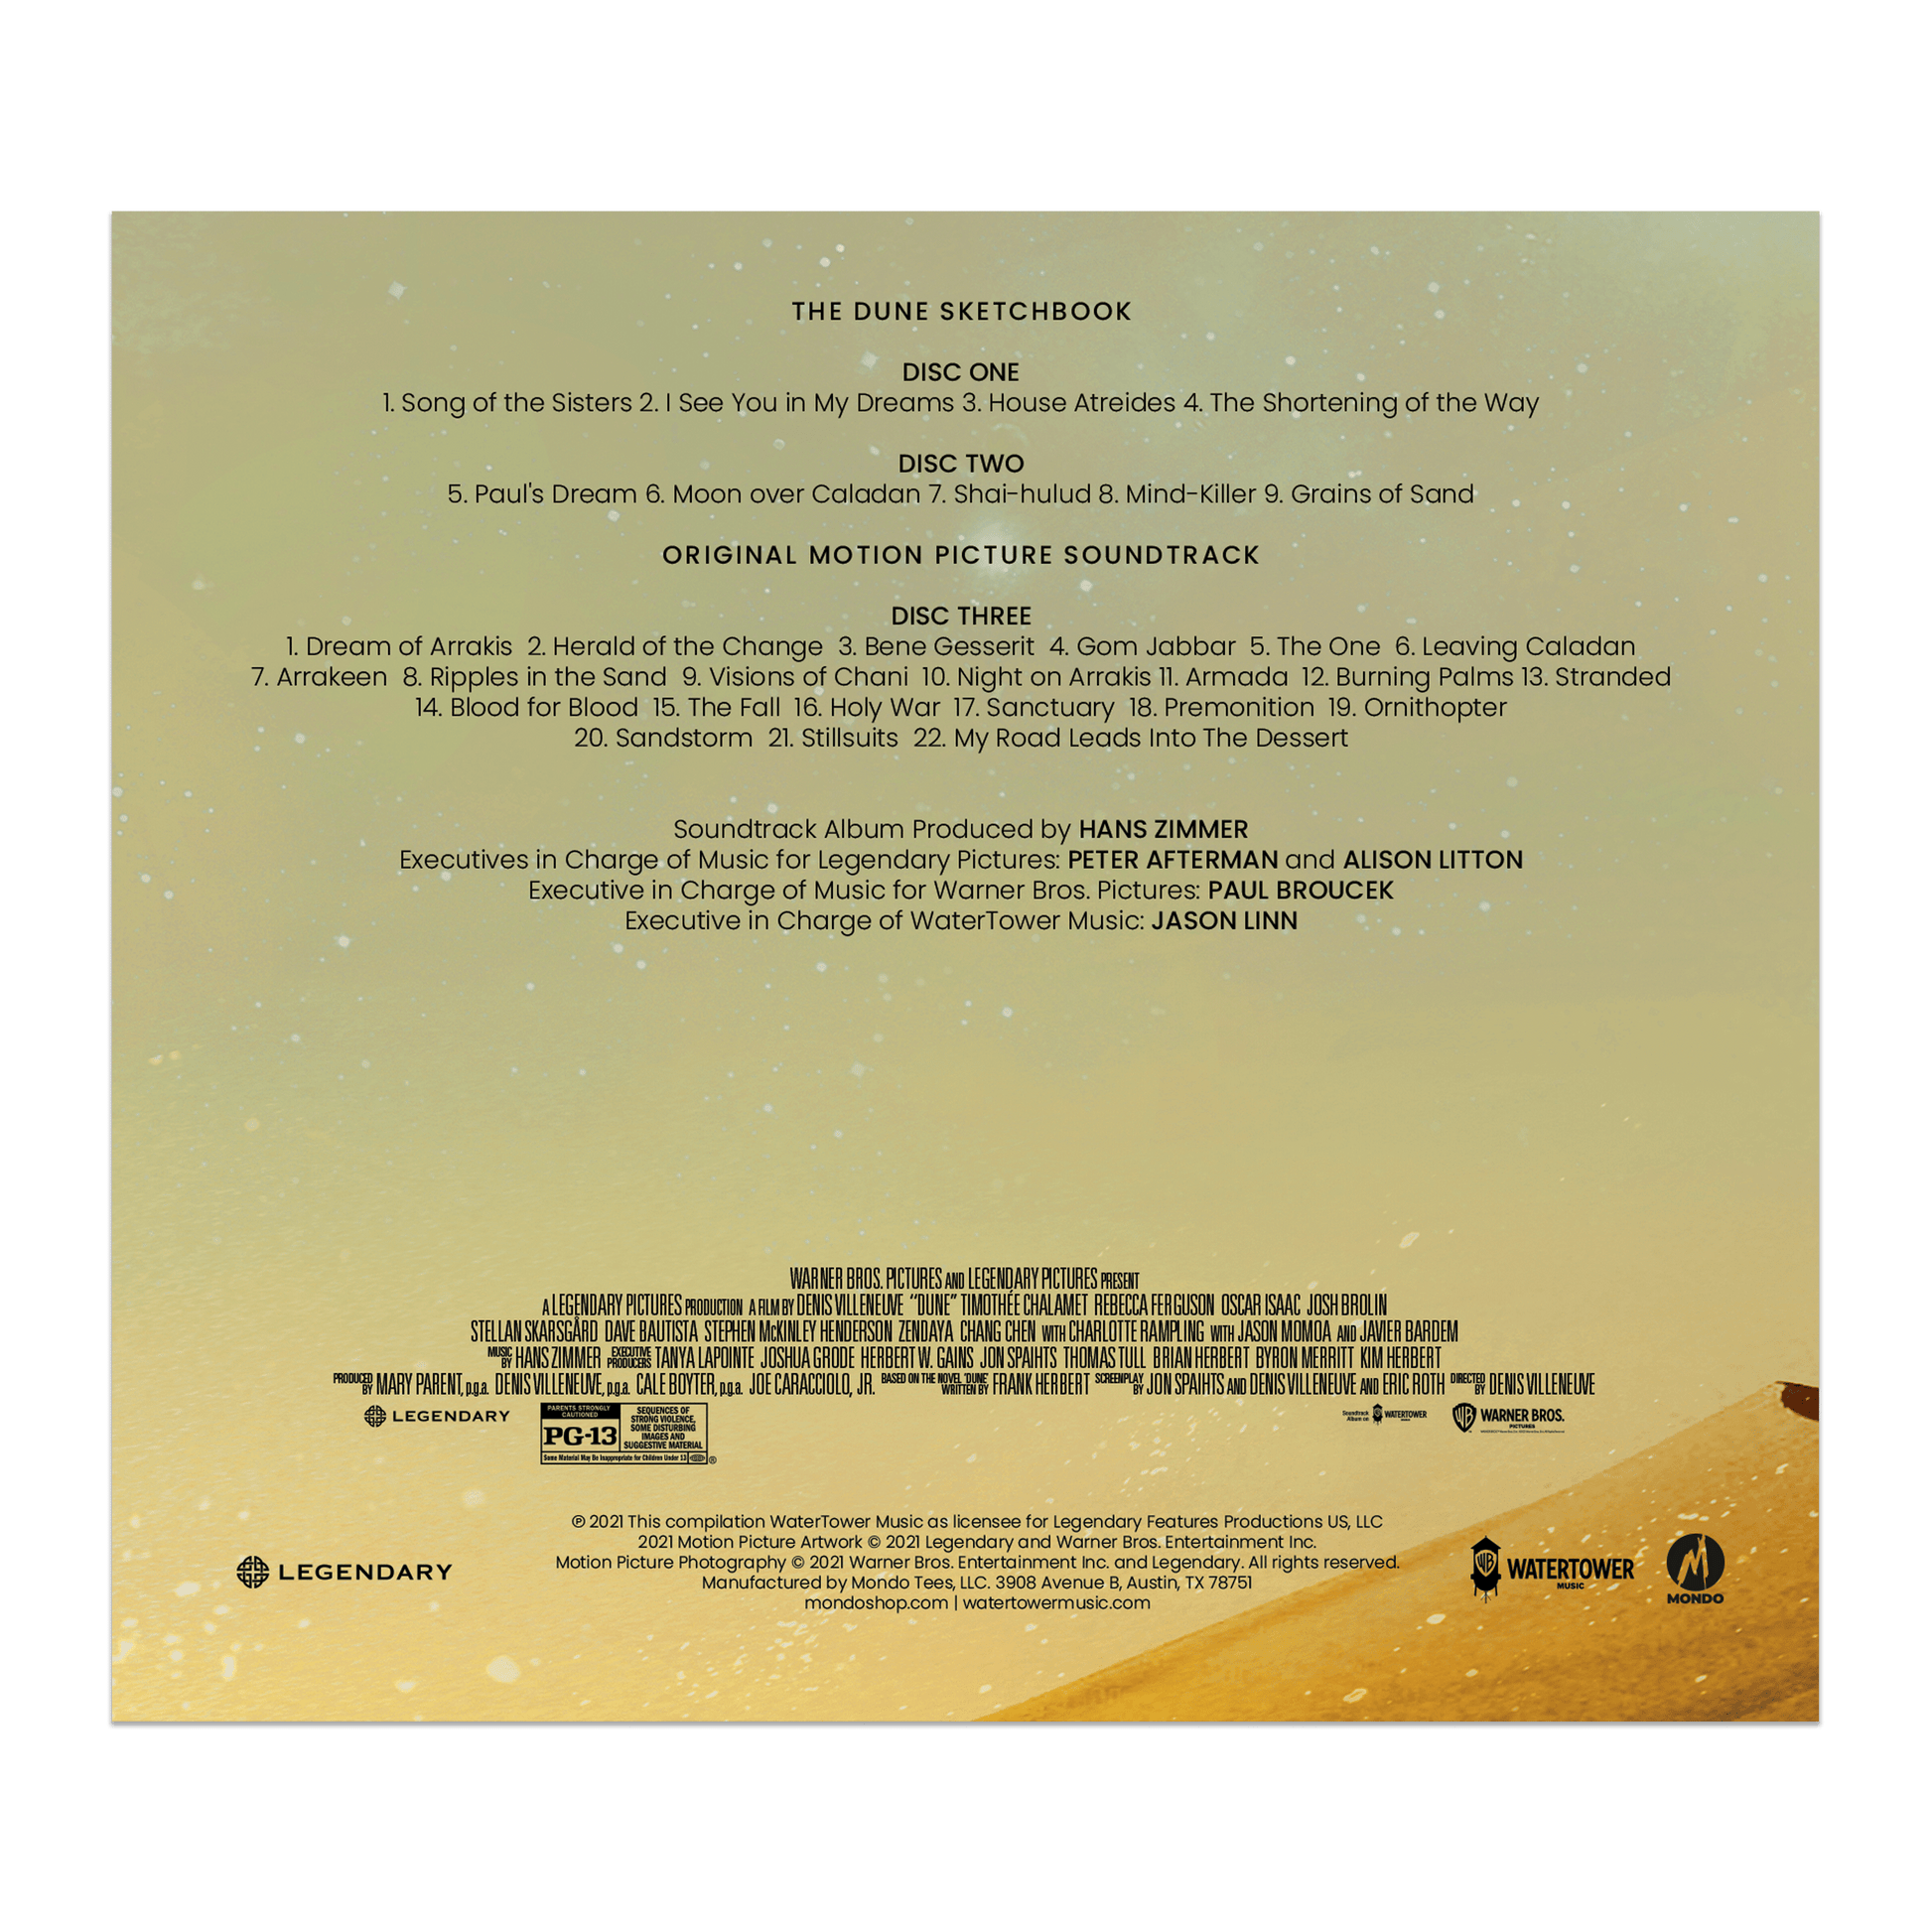 MOND-265 - Hans Zimmer - Dune - Soundtrack Deluxe Edition 3xCD